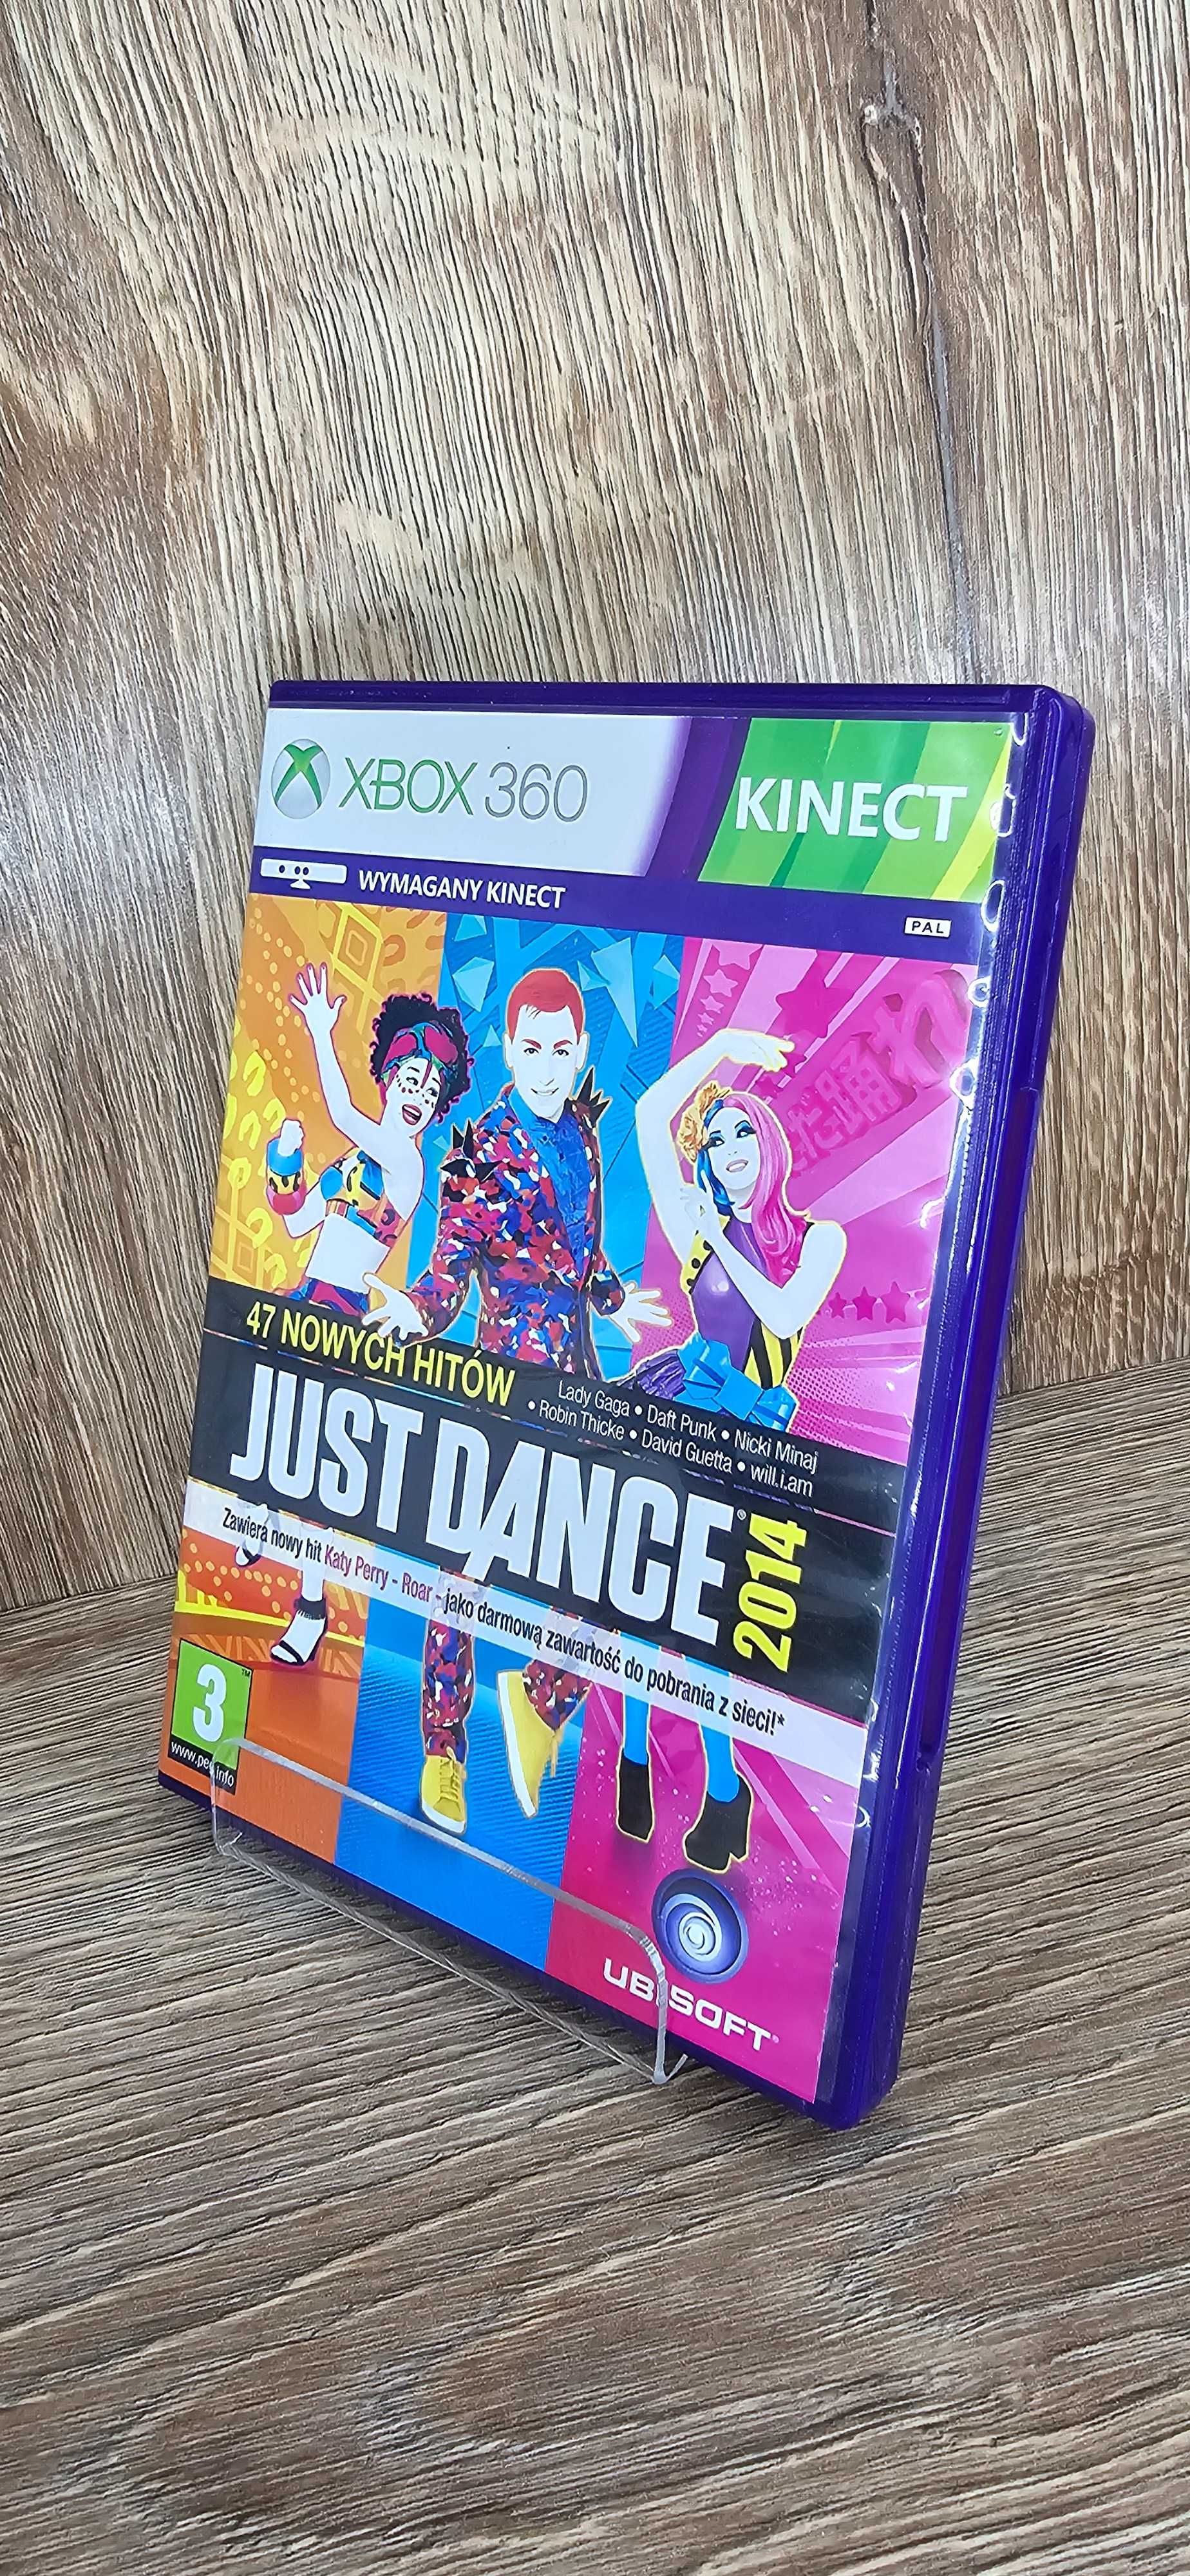 Gra Just Dance 2014 Wersja Angielska Xbox 360